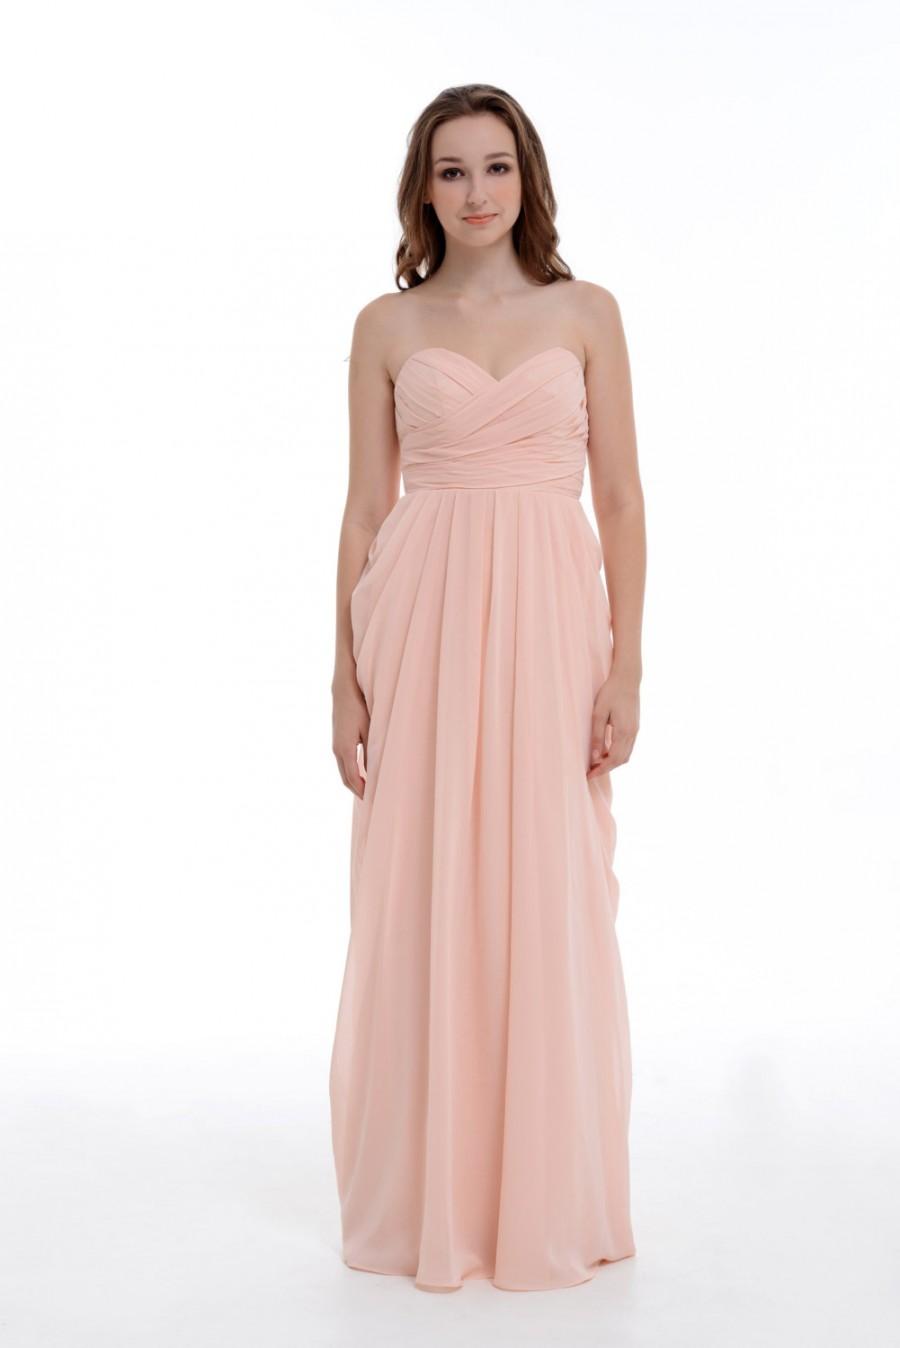 Hochzeit - Prom Dress 2015, Sweetheart Pearl Pink A-Line/Princess Floor-Length Chiffon Bridesmaid Dress With Ruffle